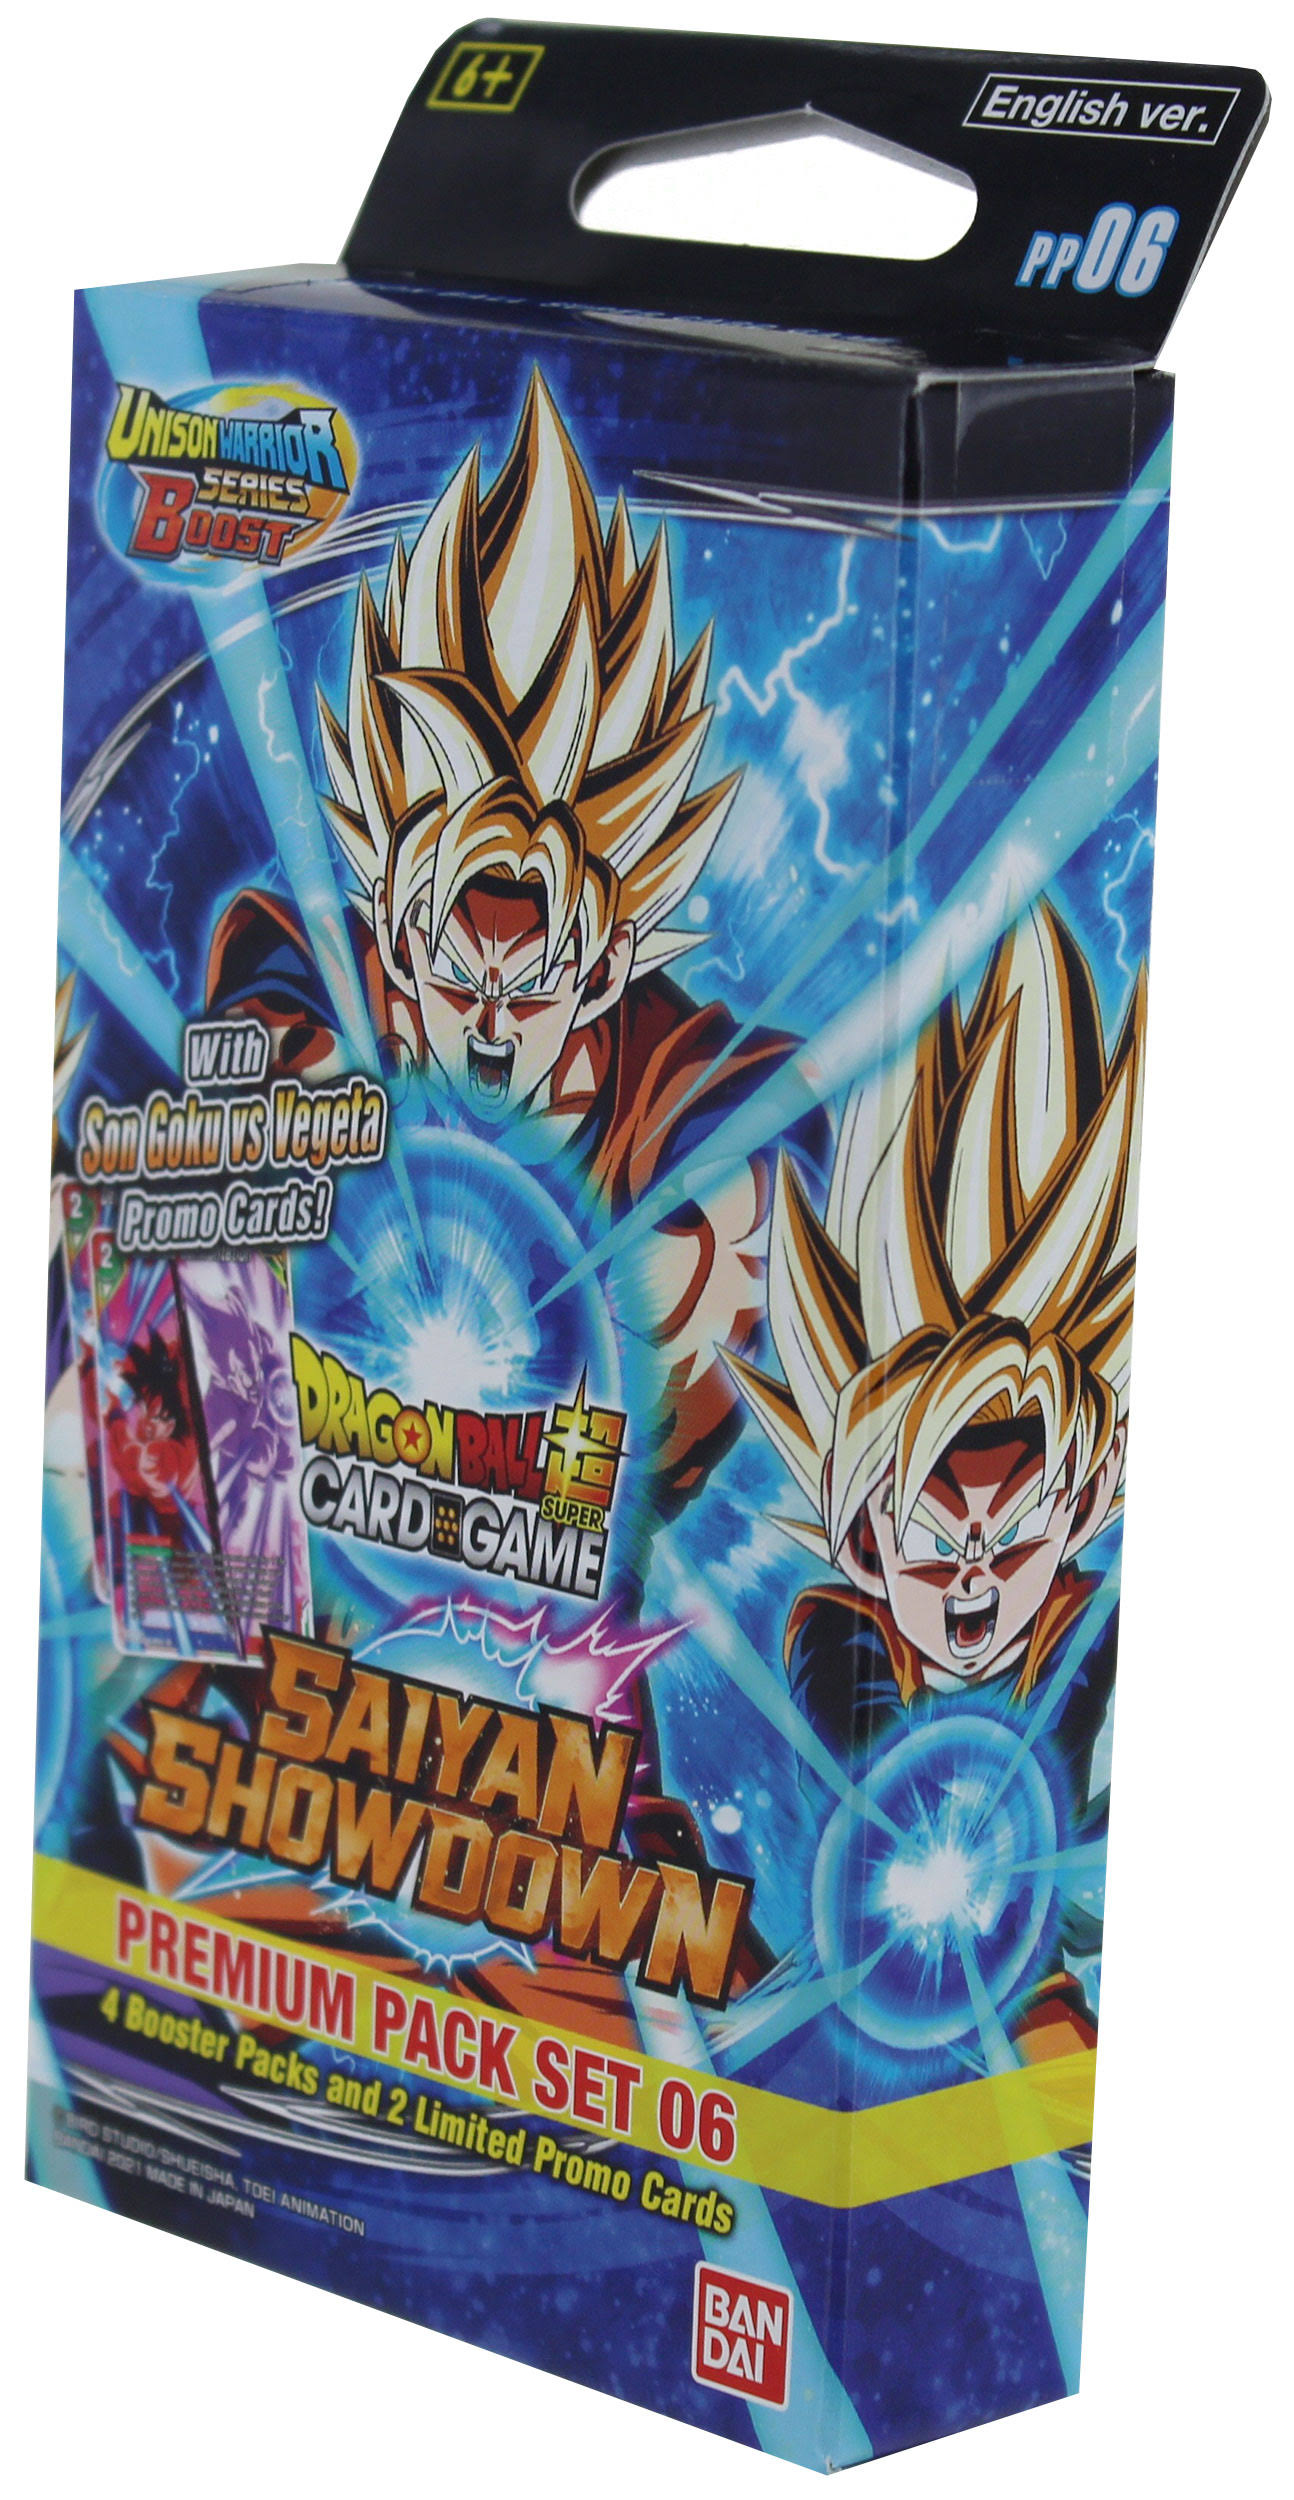 Dragon Ball Super: Unison Warrior - Saiyan Showdown Premium Pack Set